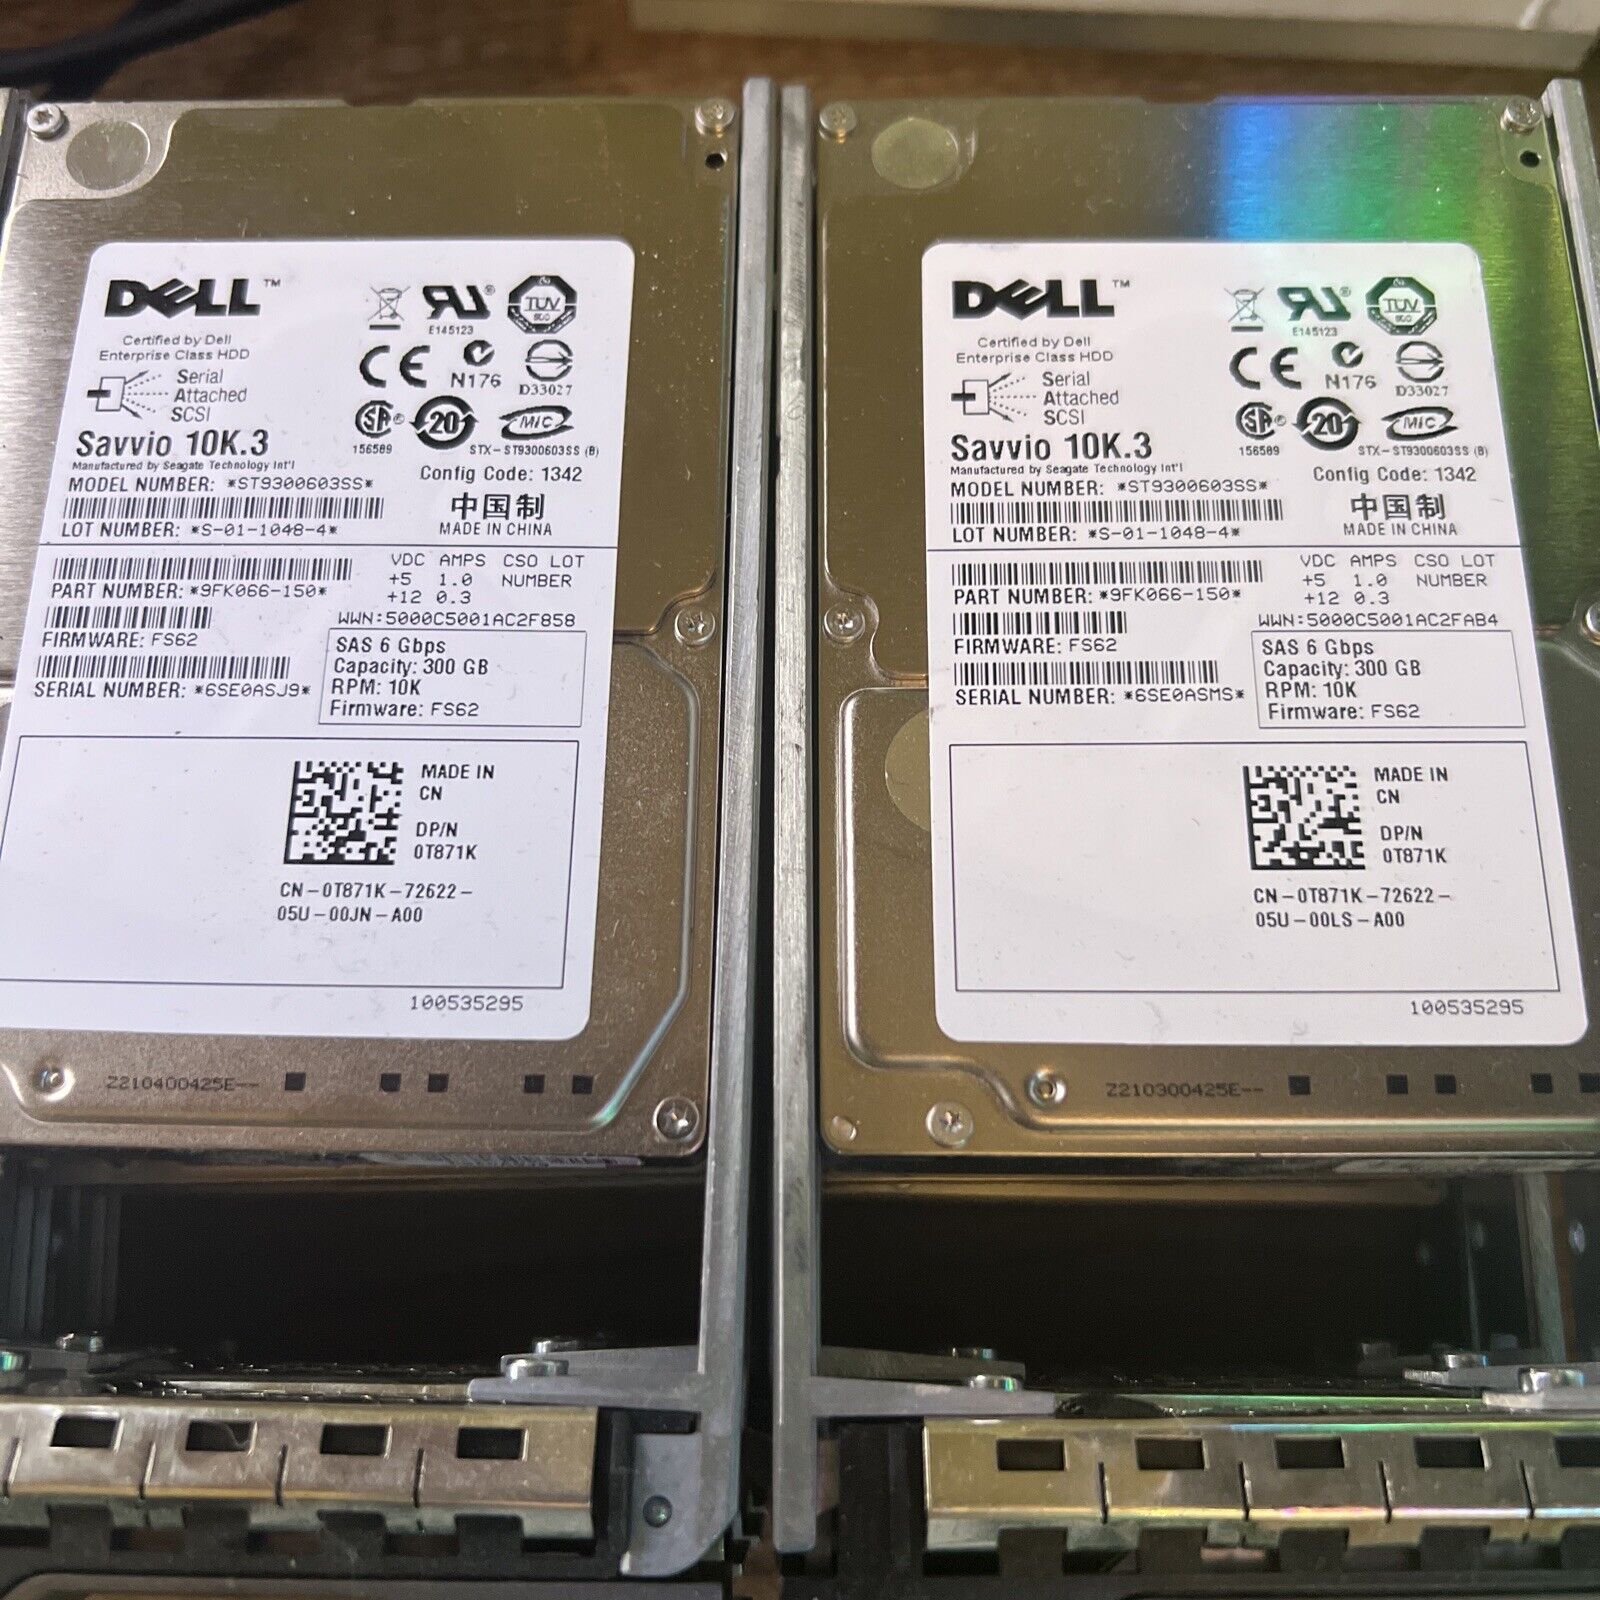 Dell 300GB SAS 2.5 inch 10K ST9300603SS server hard disk D/PN: 0T871K